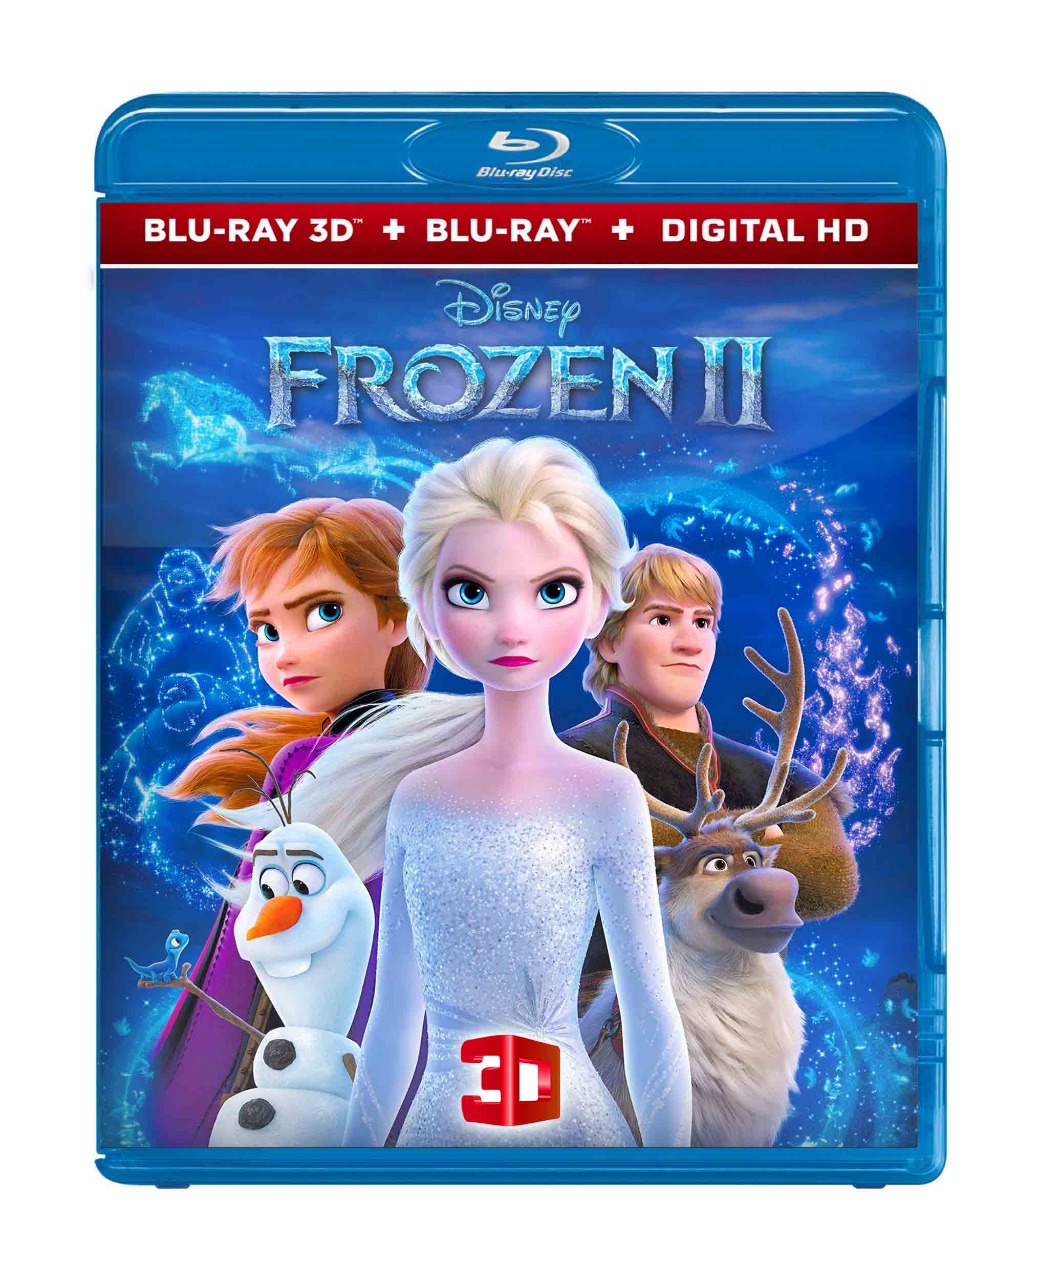 Gematigd eiwit Opblazen Frozen II (3D Blu-ray 2019) Region free + Shipping Free !!